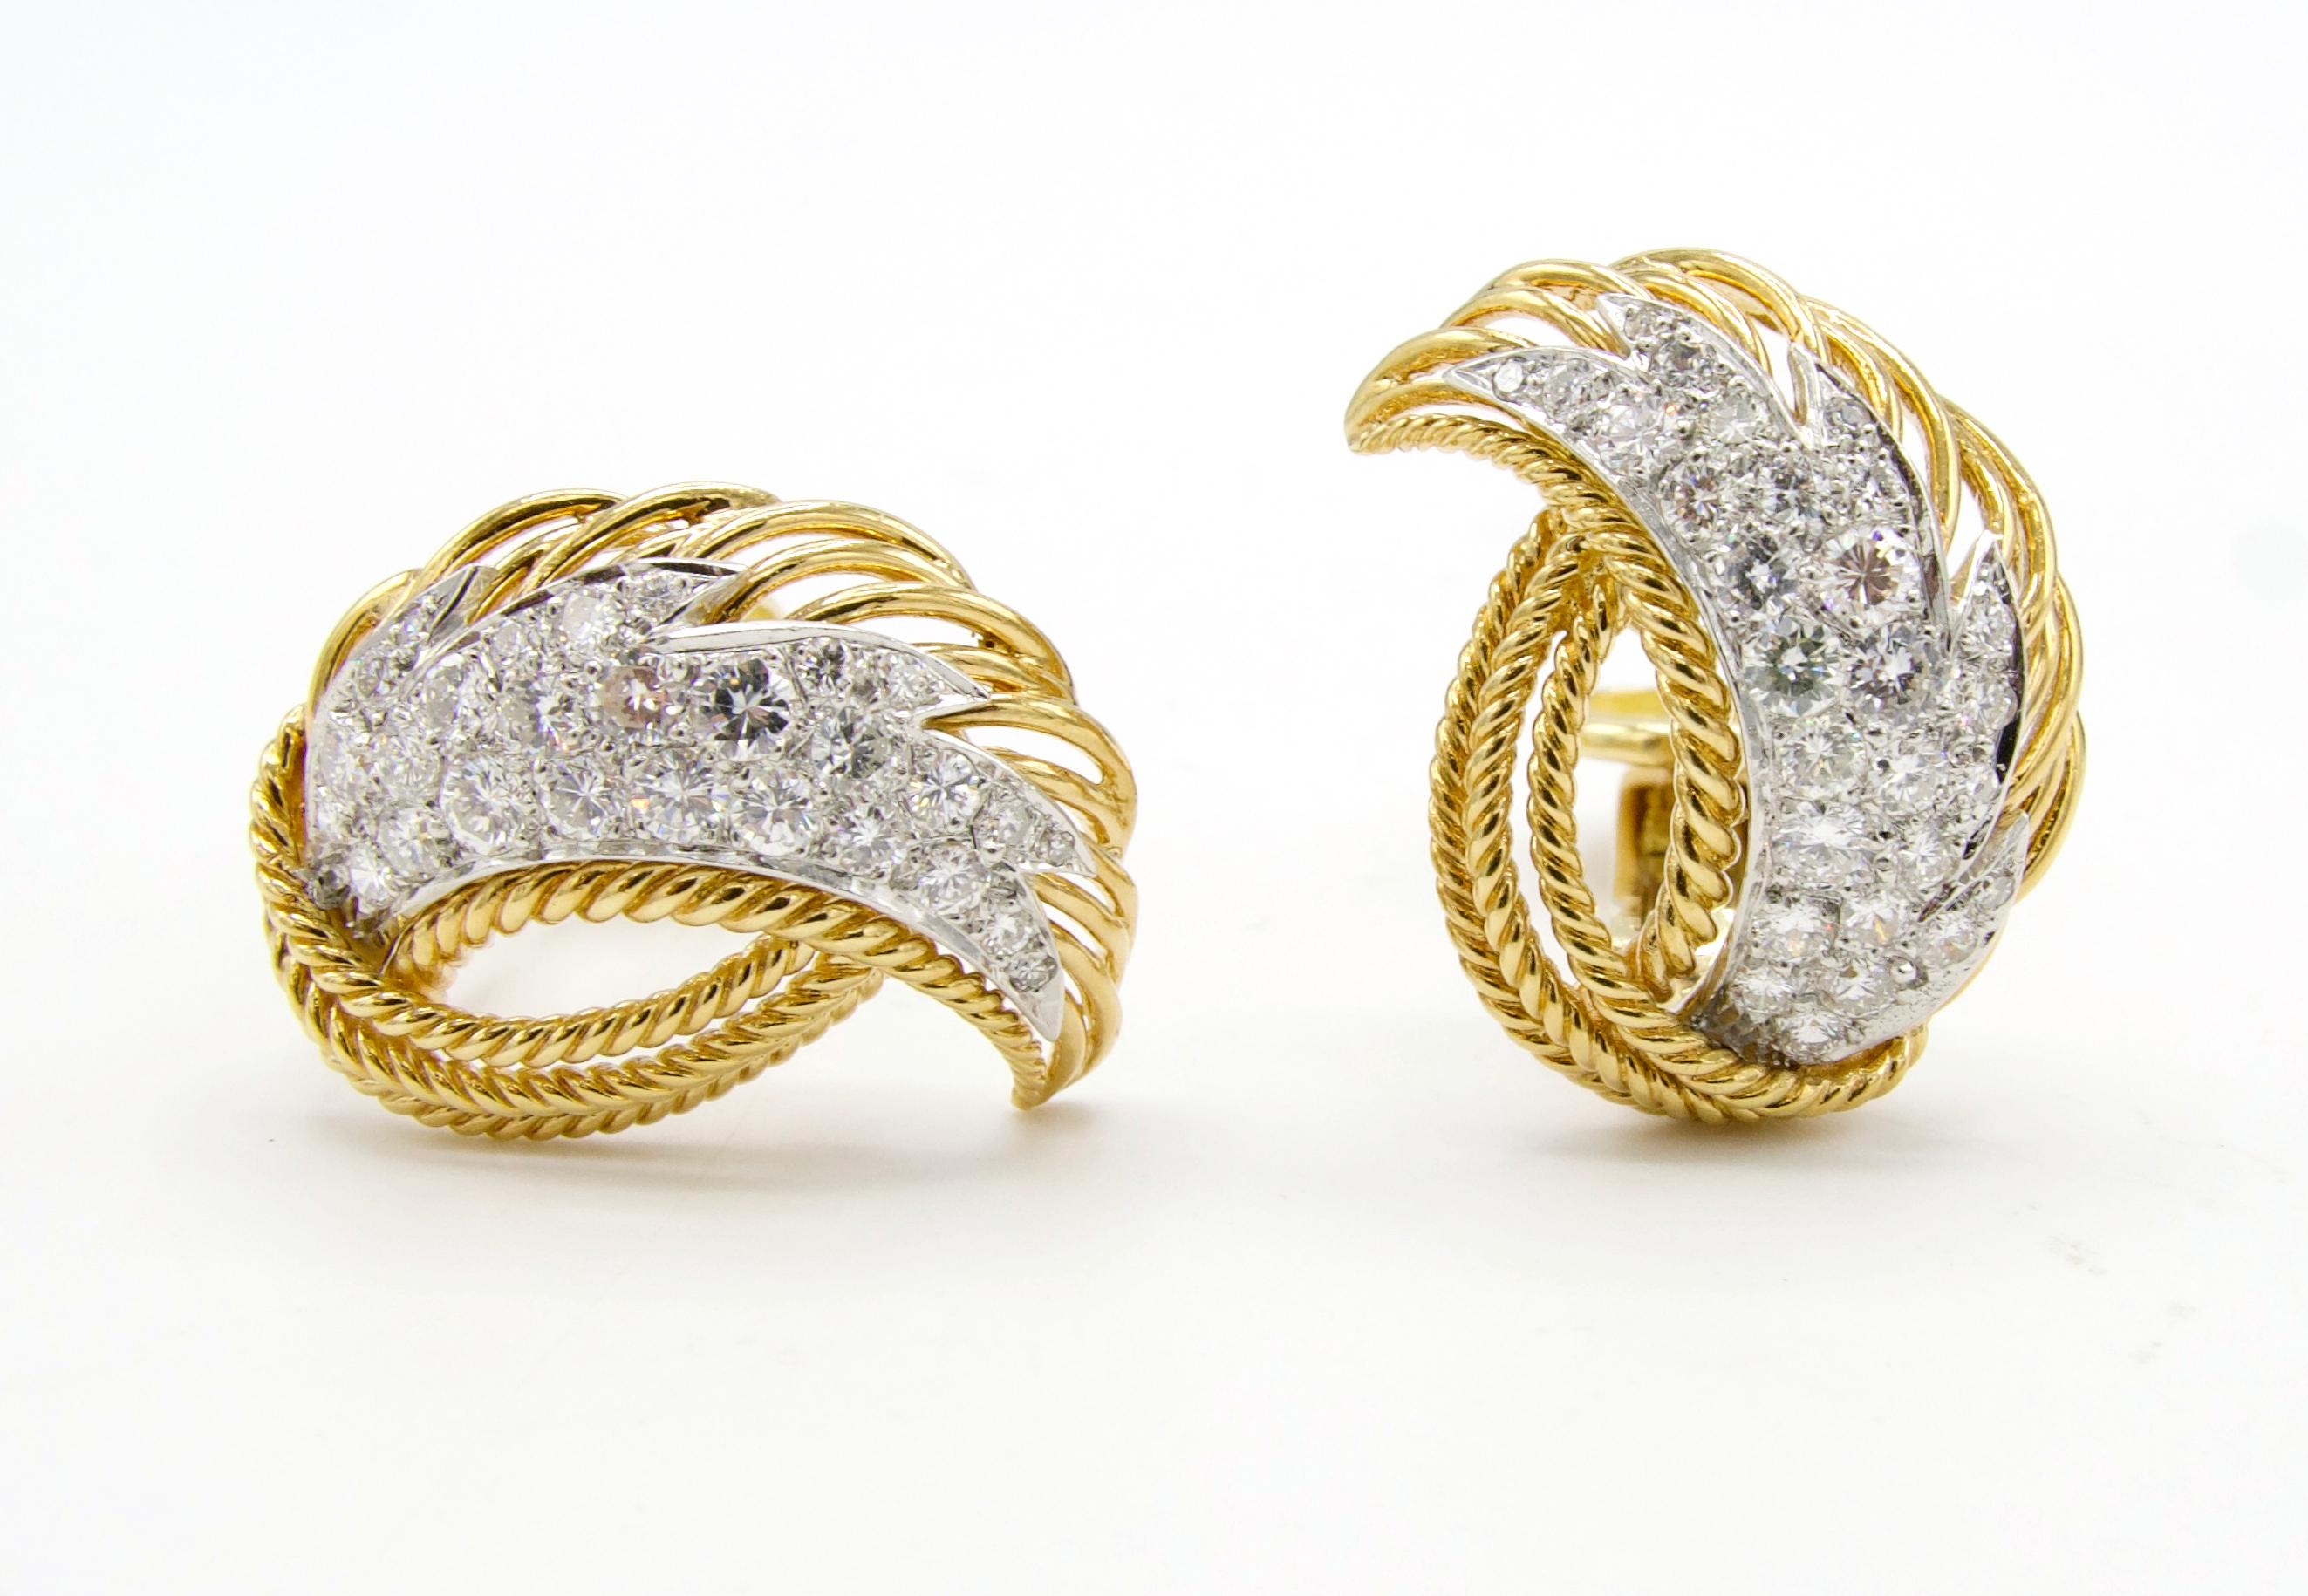 Retro 18 Karat Yellow Gold Diamond Earrings
Metal: 18k yellow gold
Weight: 19.53 grams
Diamonds: Approx. 1.50 CTW G VS round diamonds
Length: 24.5mm
Width: 21mm
Backs: Lever backs (clip on) 
